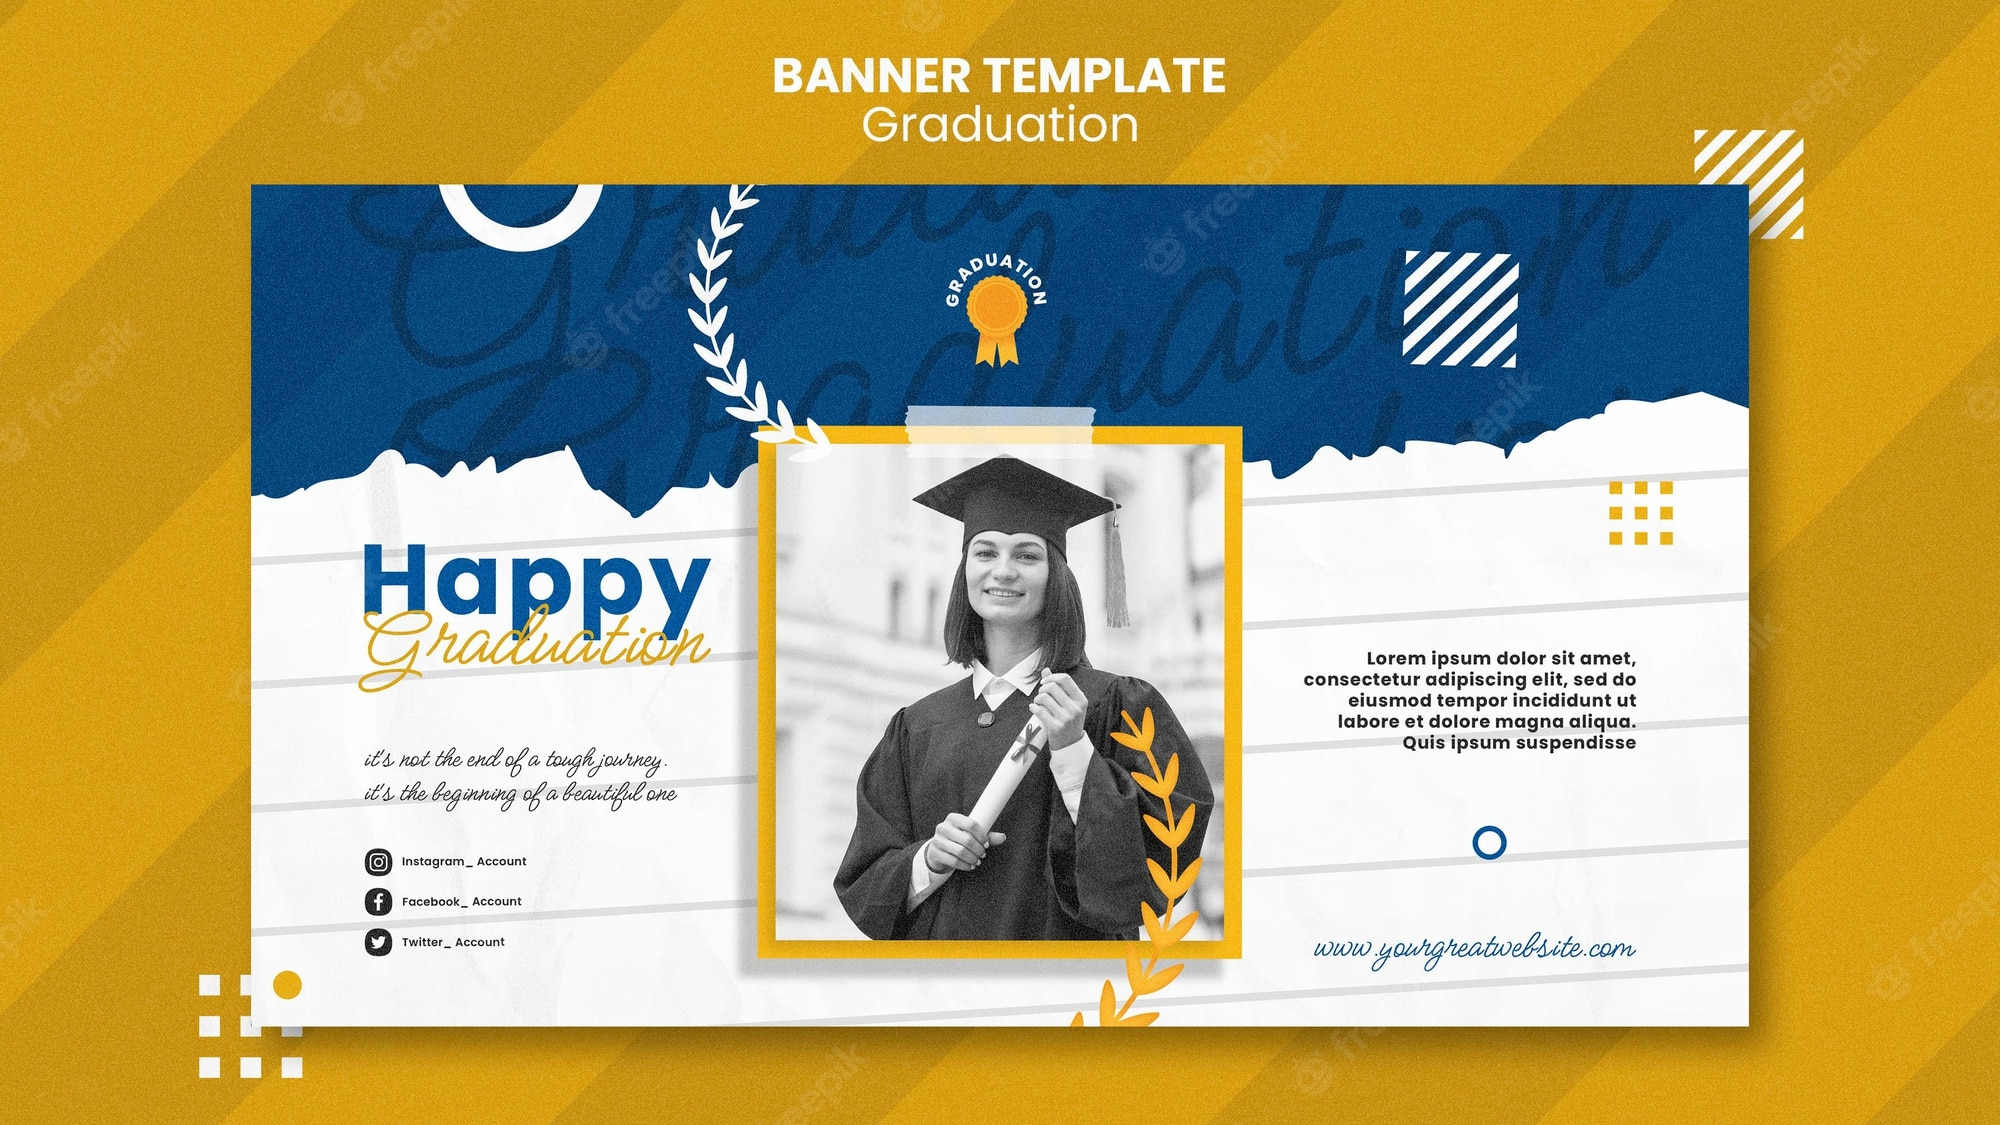 Graduation banner Images  Free Vectors, Stock Photos & PSD For Graduation Banner Template